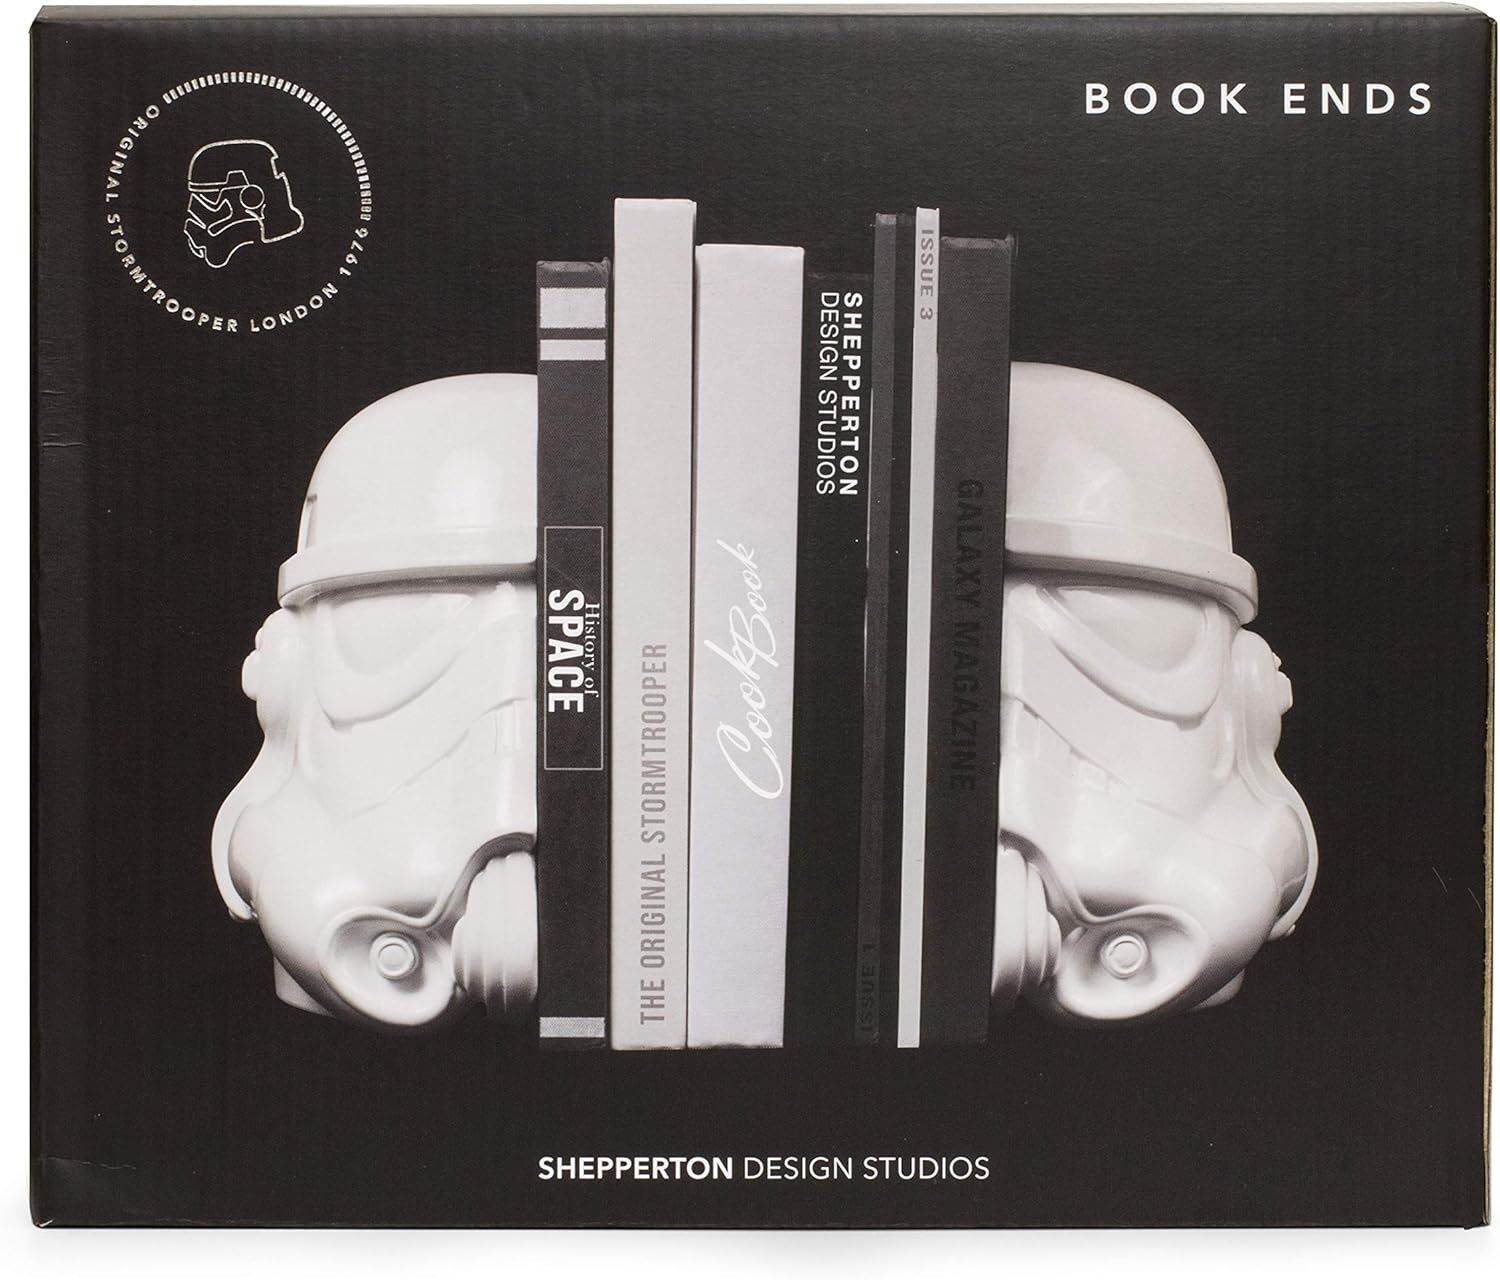 Star wars stormtroopers - book ends - nou la cutie